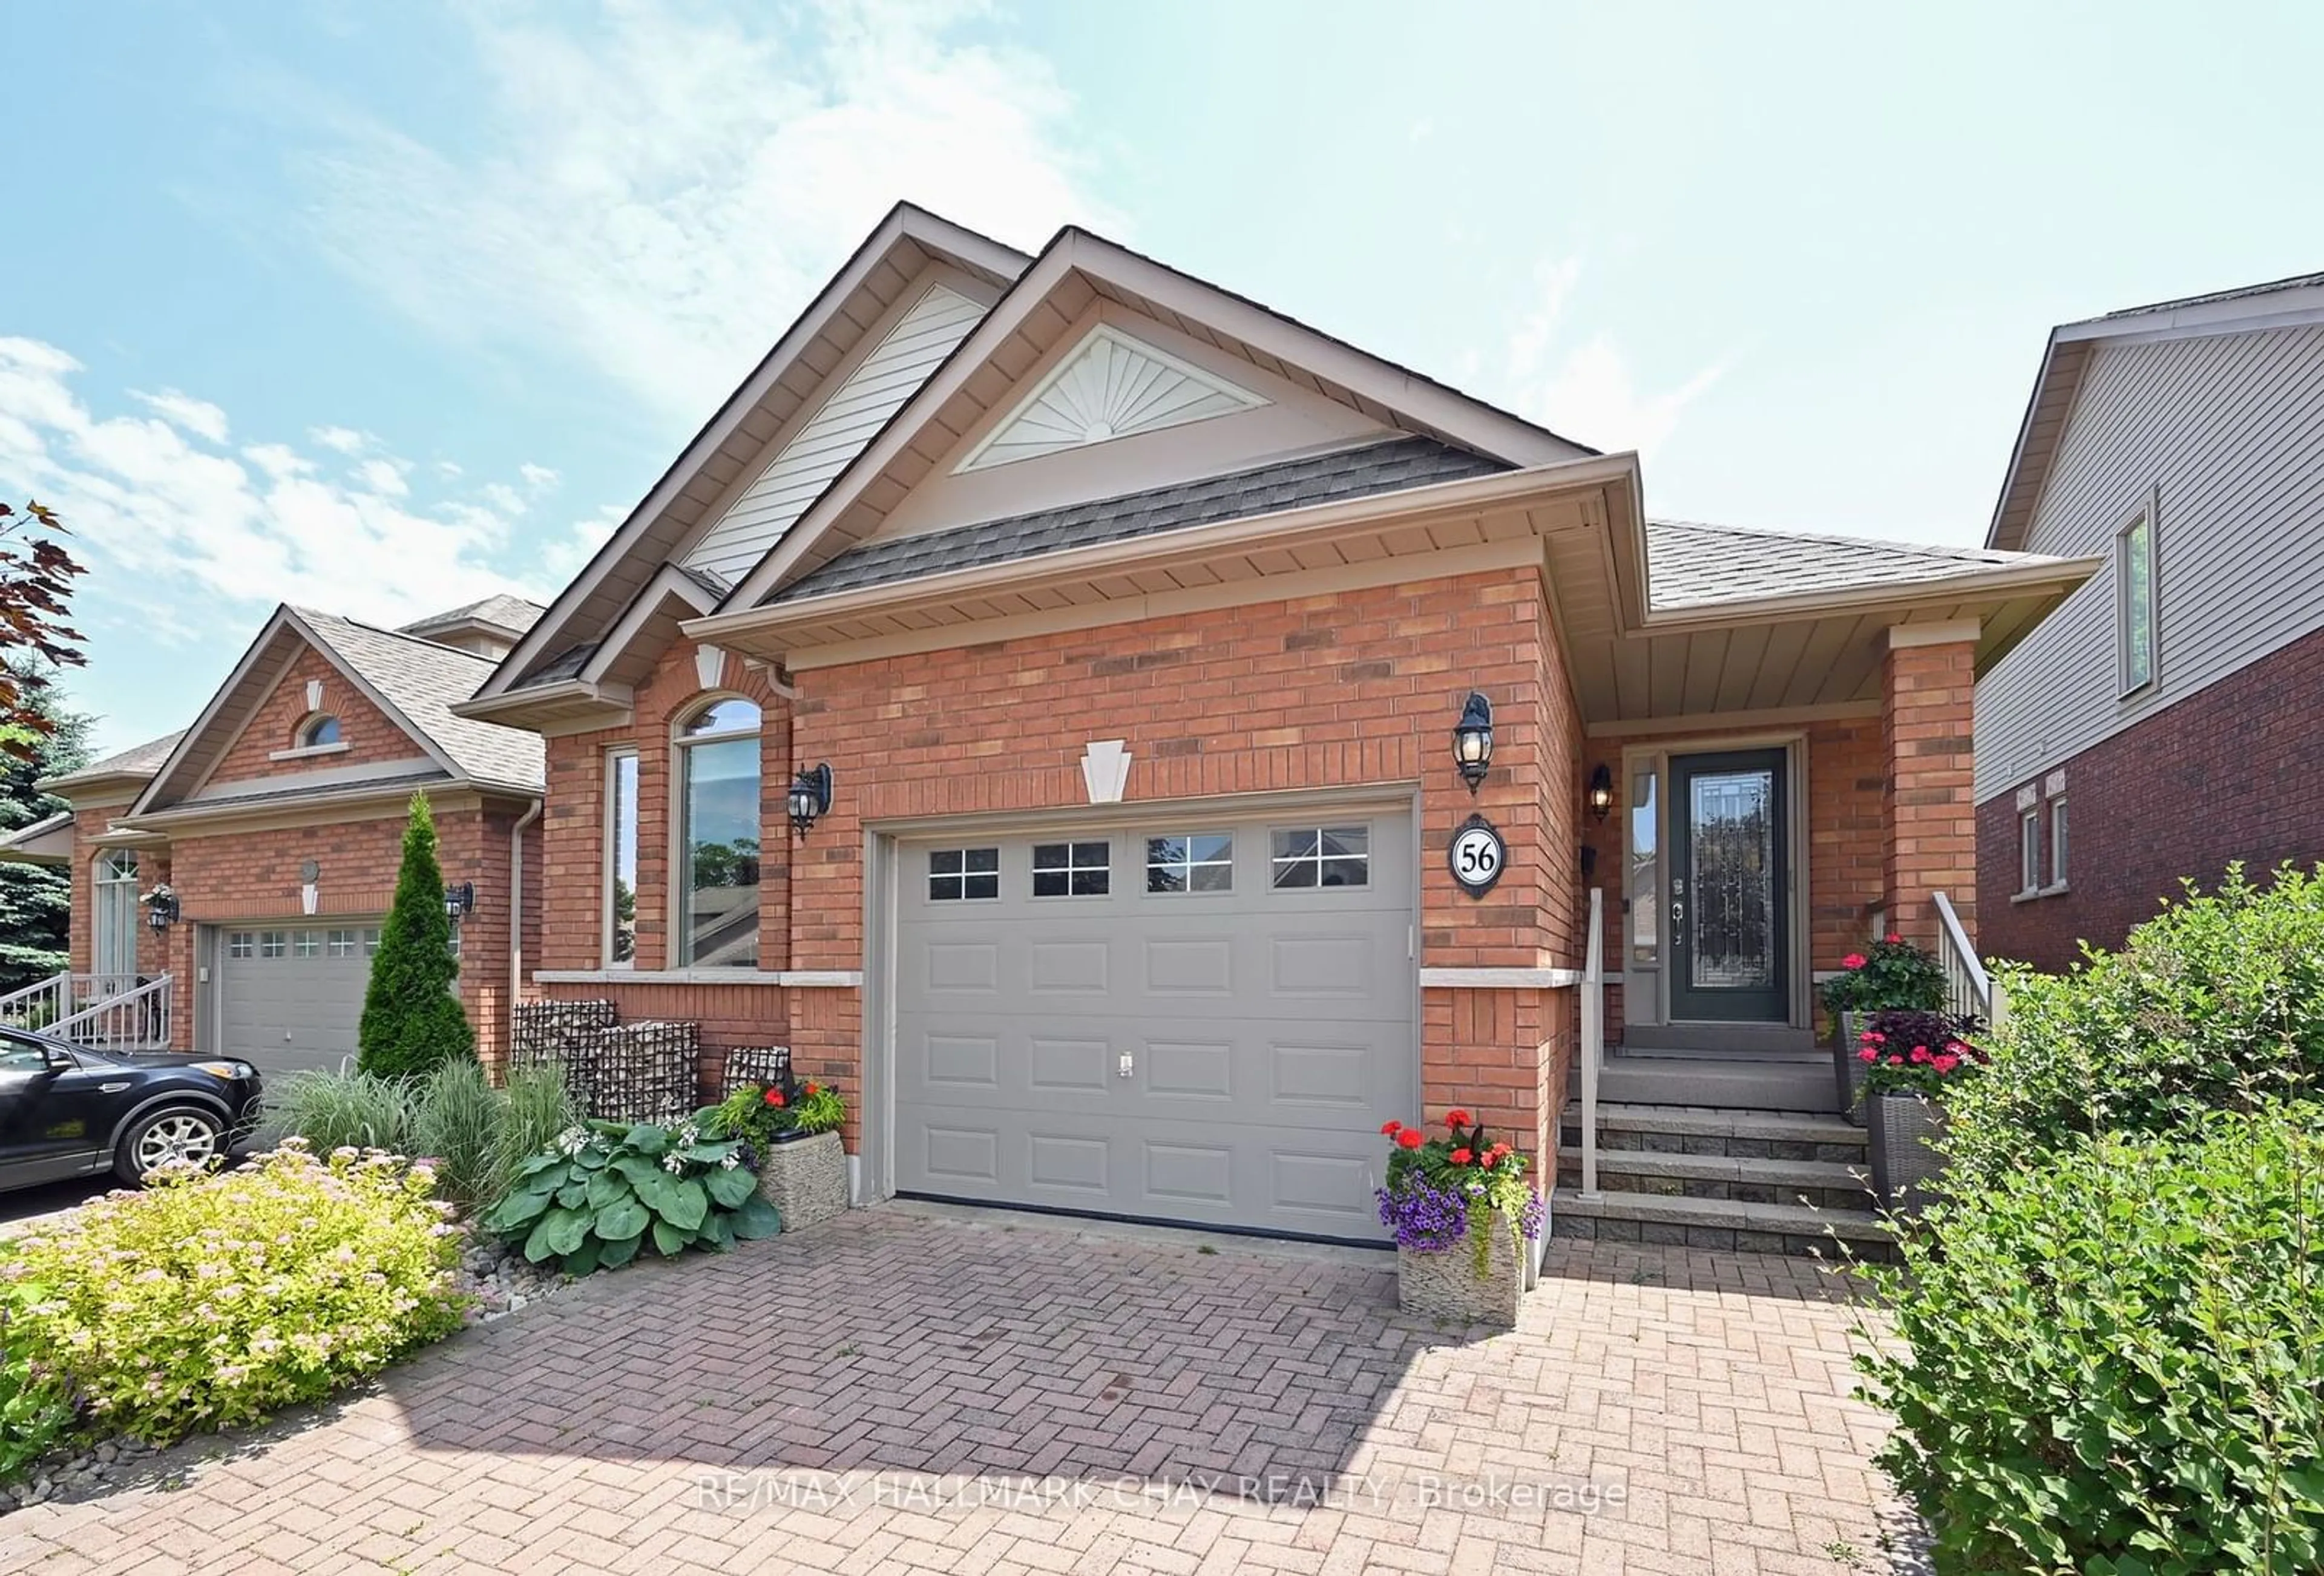 Home with brick exterior material for 56 Via Amici, New Tecumseth Ontario L9R 2C4